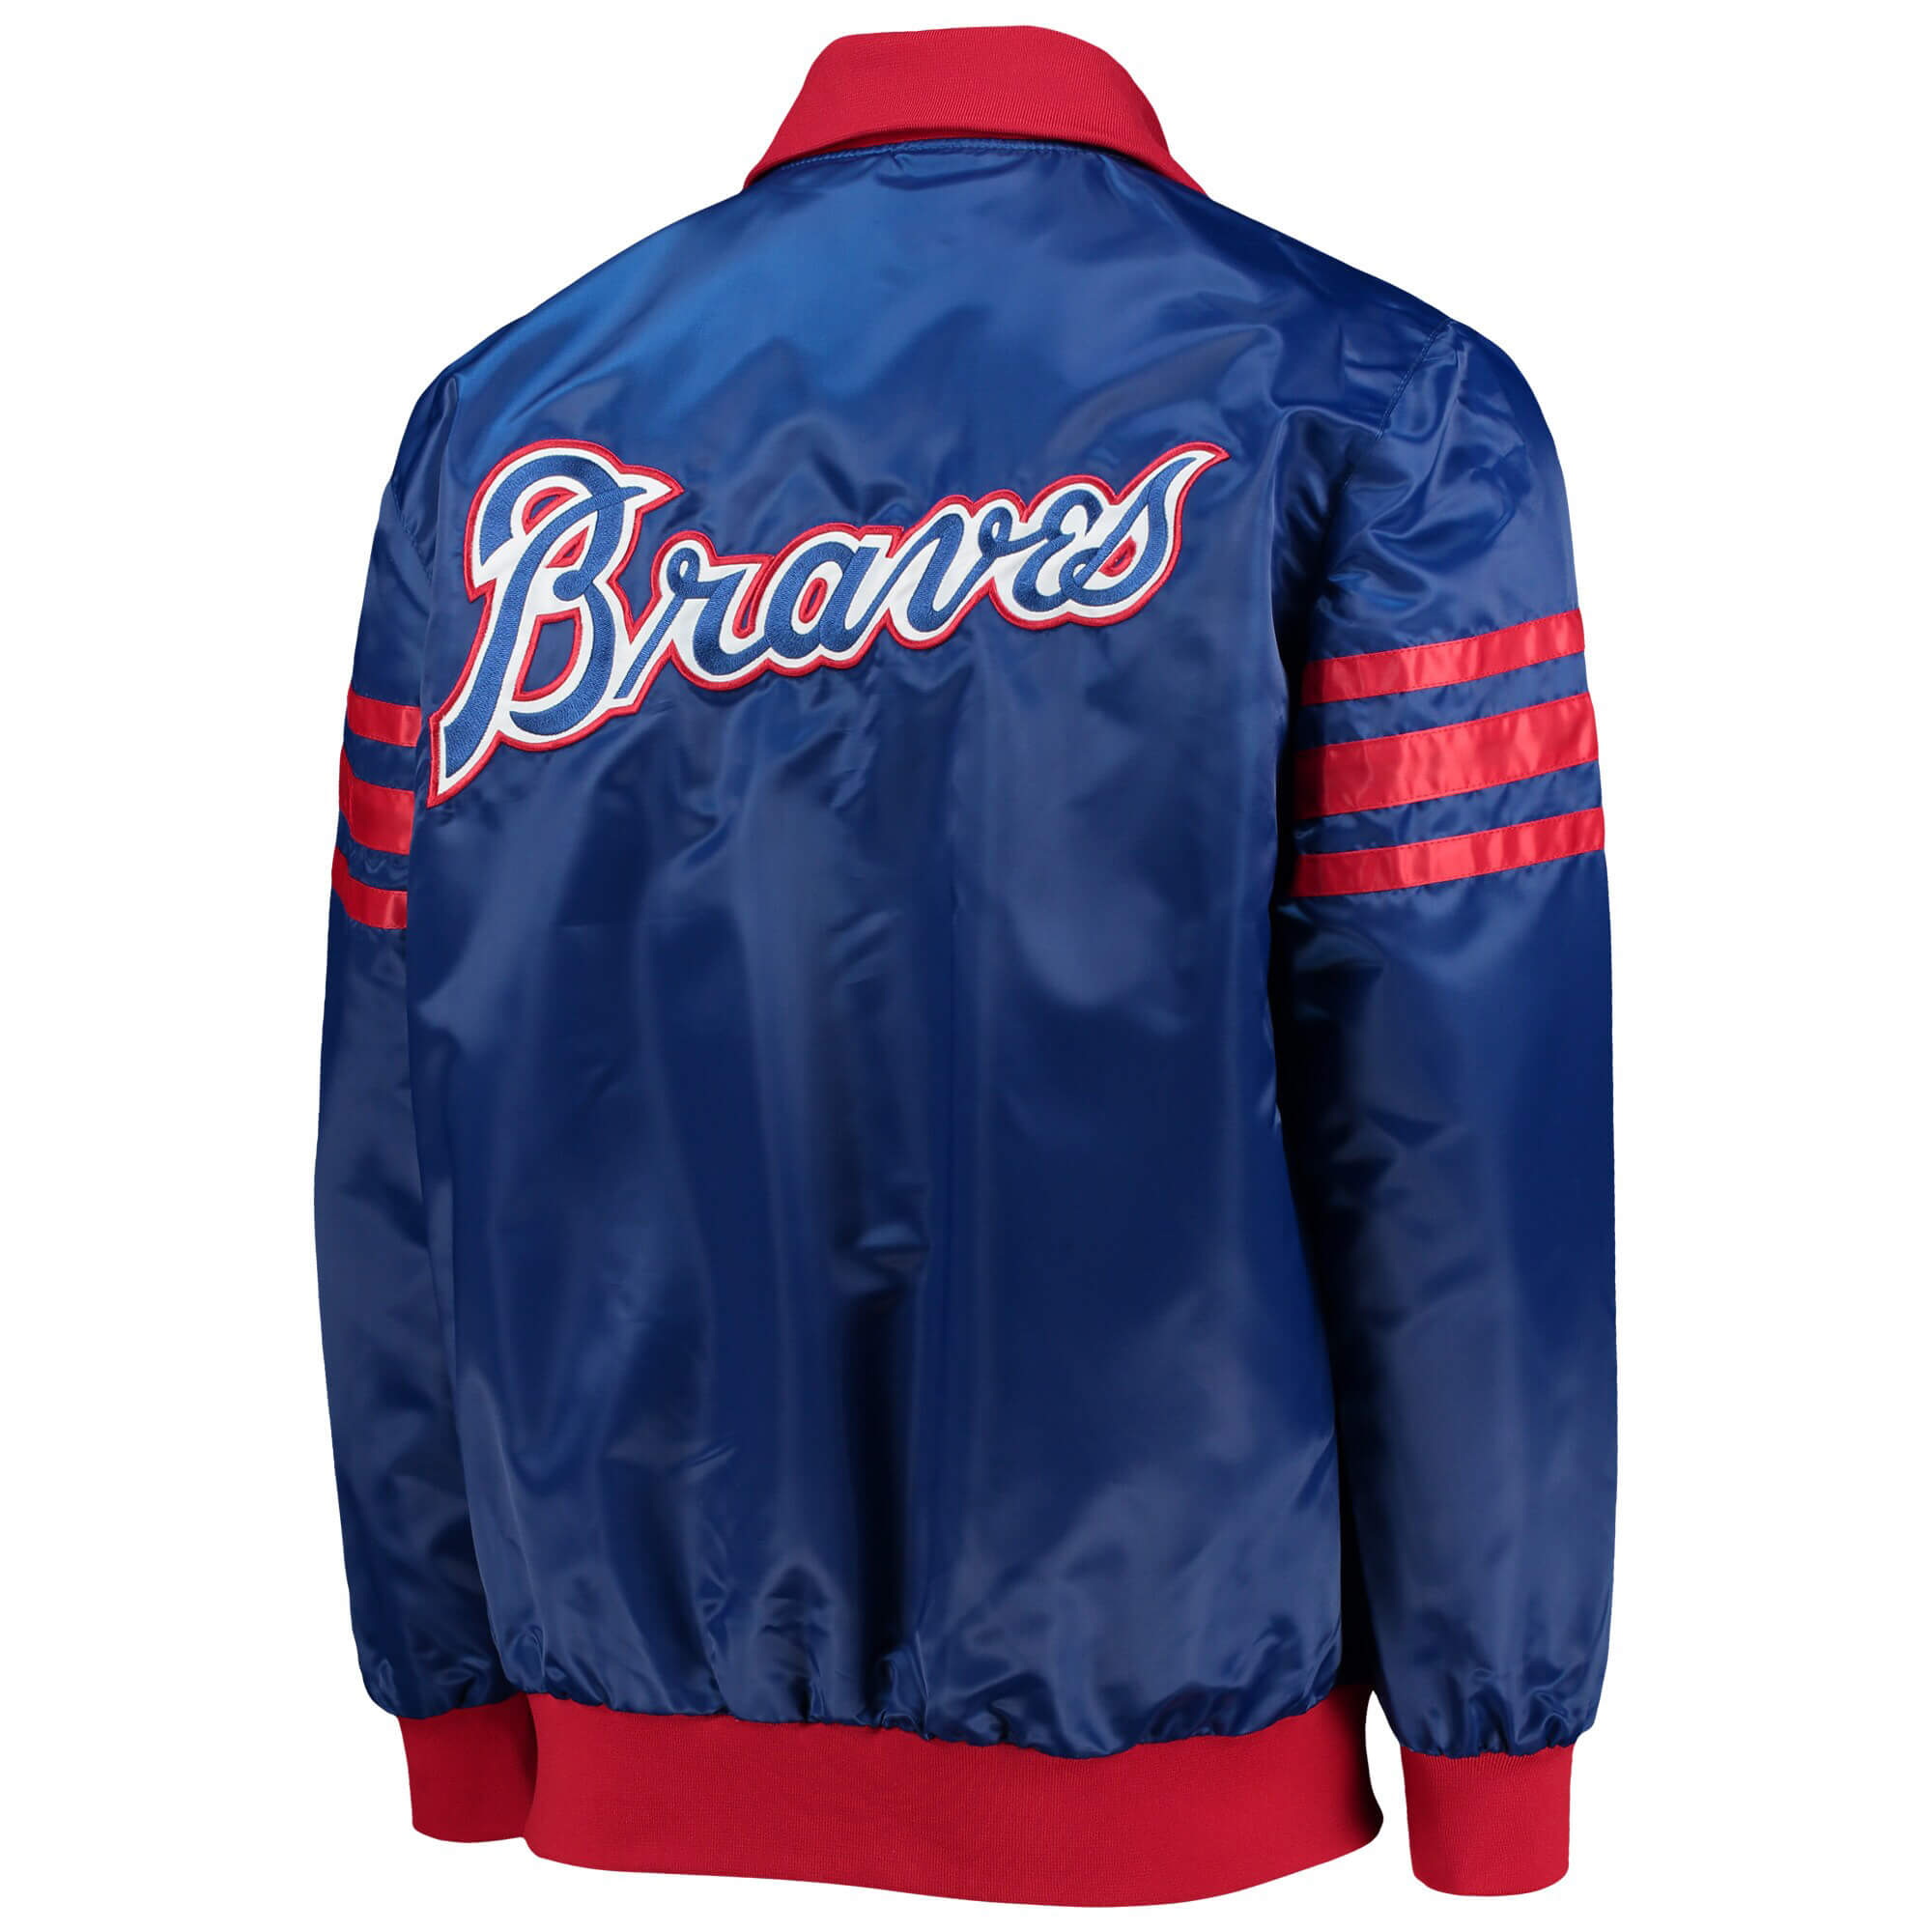 MLB Atlanta Braves Acuna Satin Jacket - Maker of Jacket